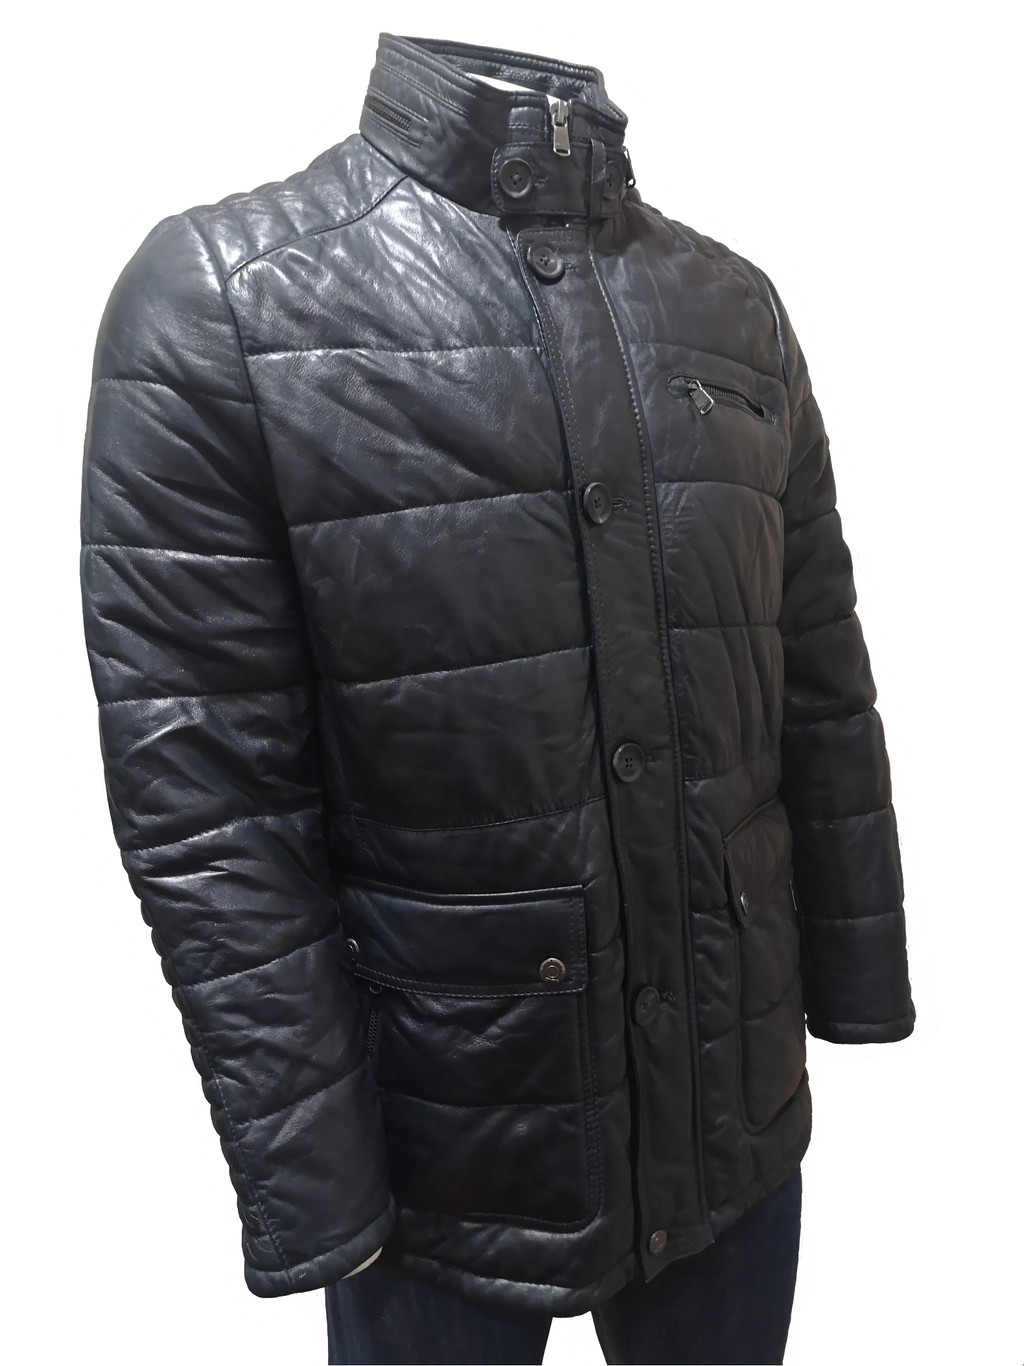 Men's Leather Puffer Jacket: Nicolo